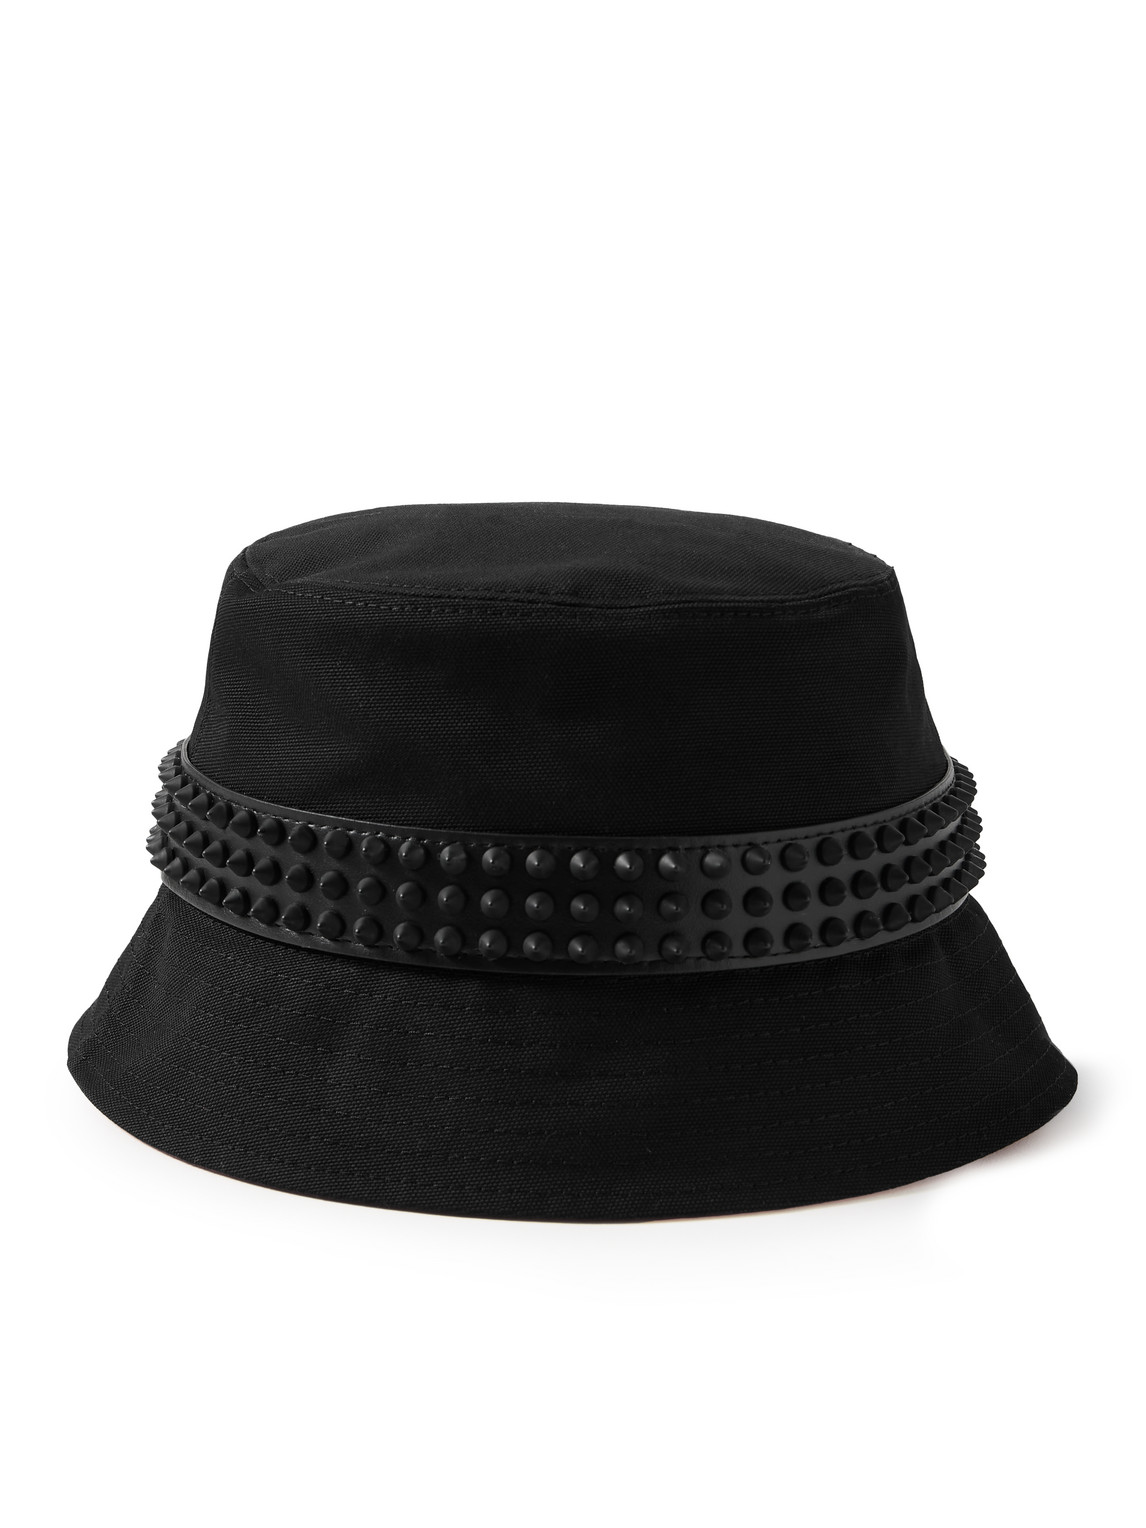 Christian Louboutin - Bobino Spikes Leather-Trimmed Cotton-Canvas Bucket Hat - Men - Black - M von Christian Louboutin